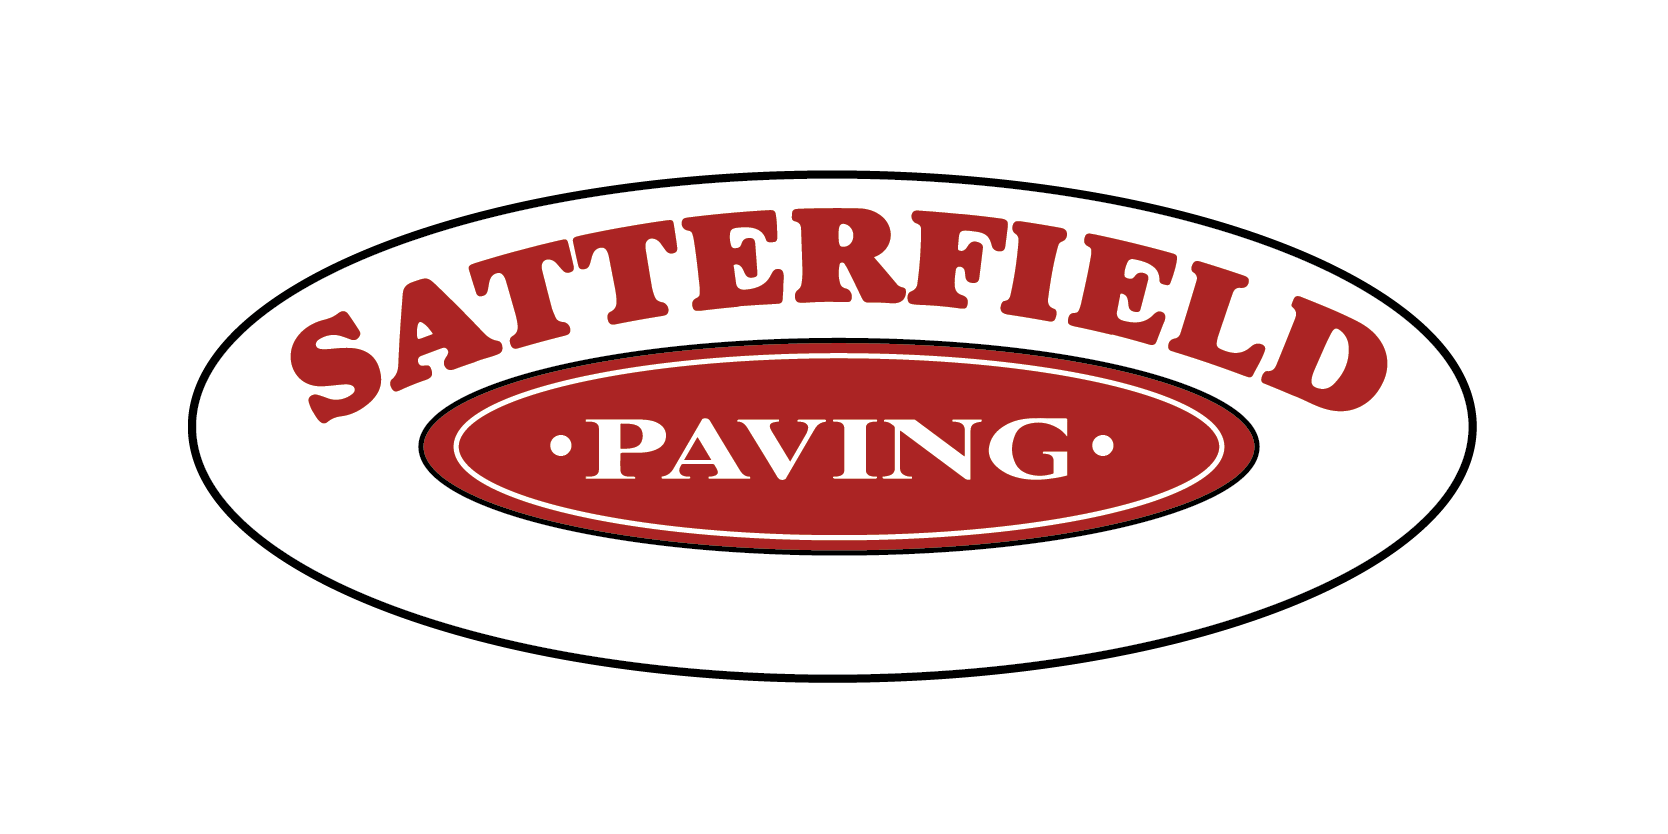 Satterfield Paving Logo